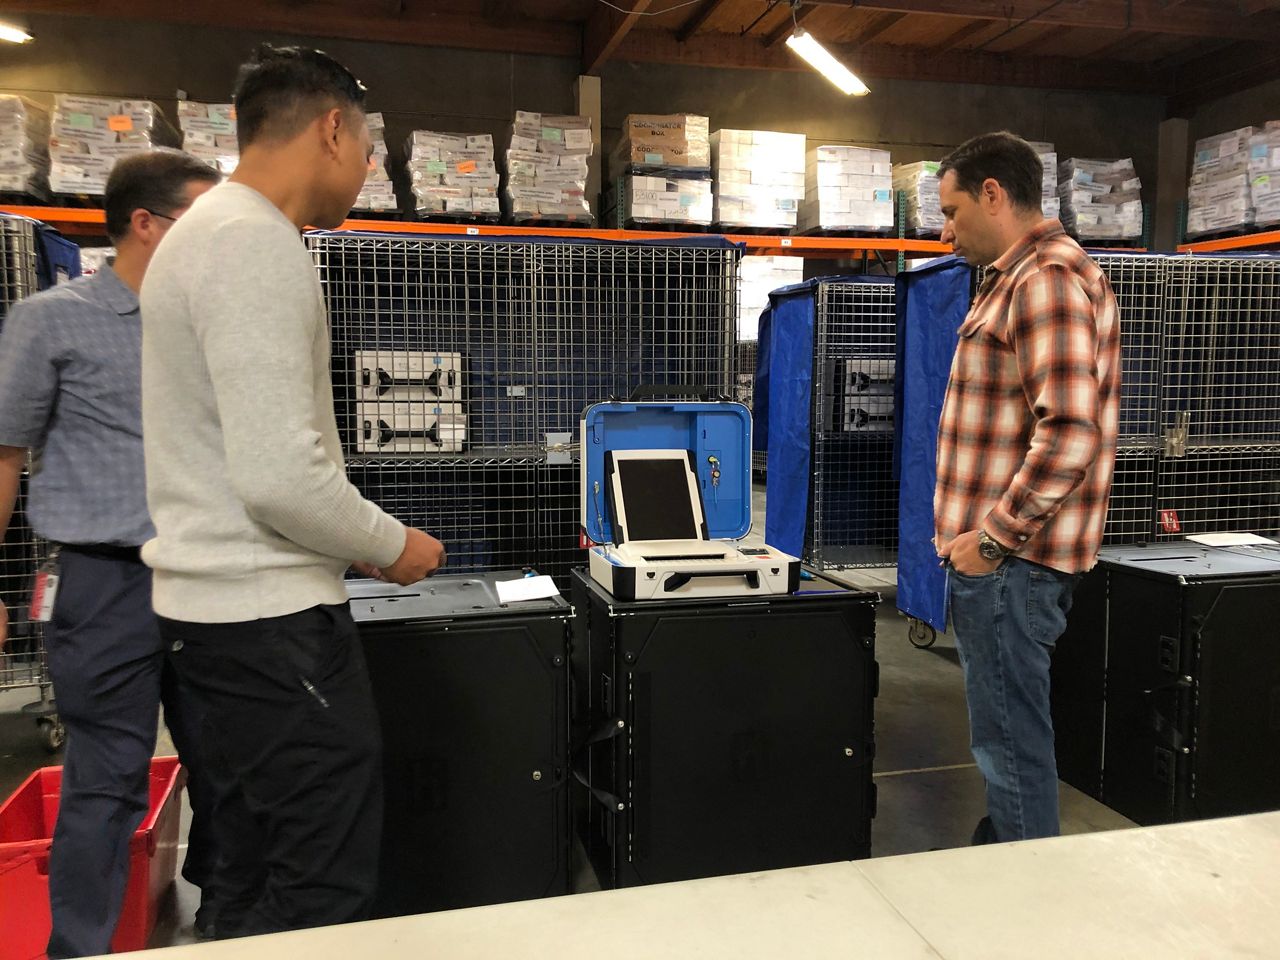 Voting machines